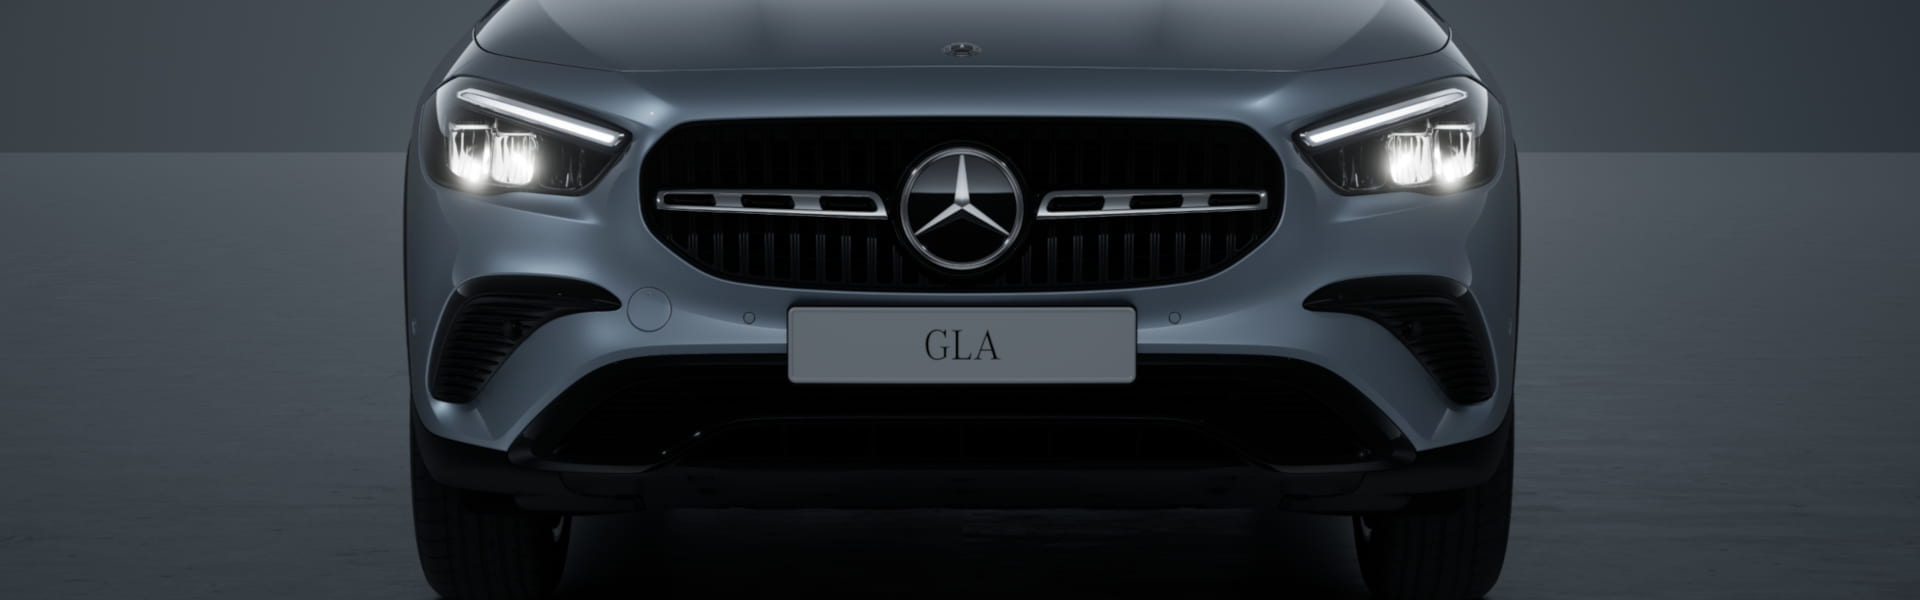 Mercedes-Benz GLA SUV